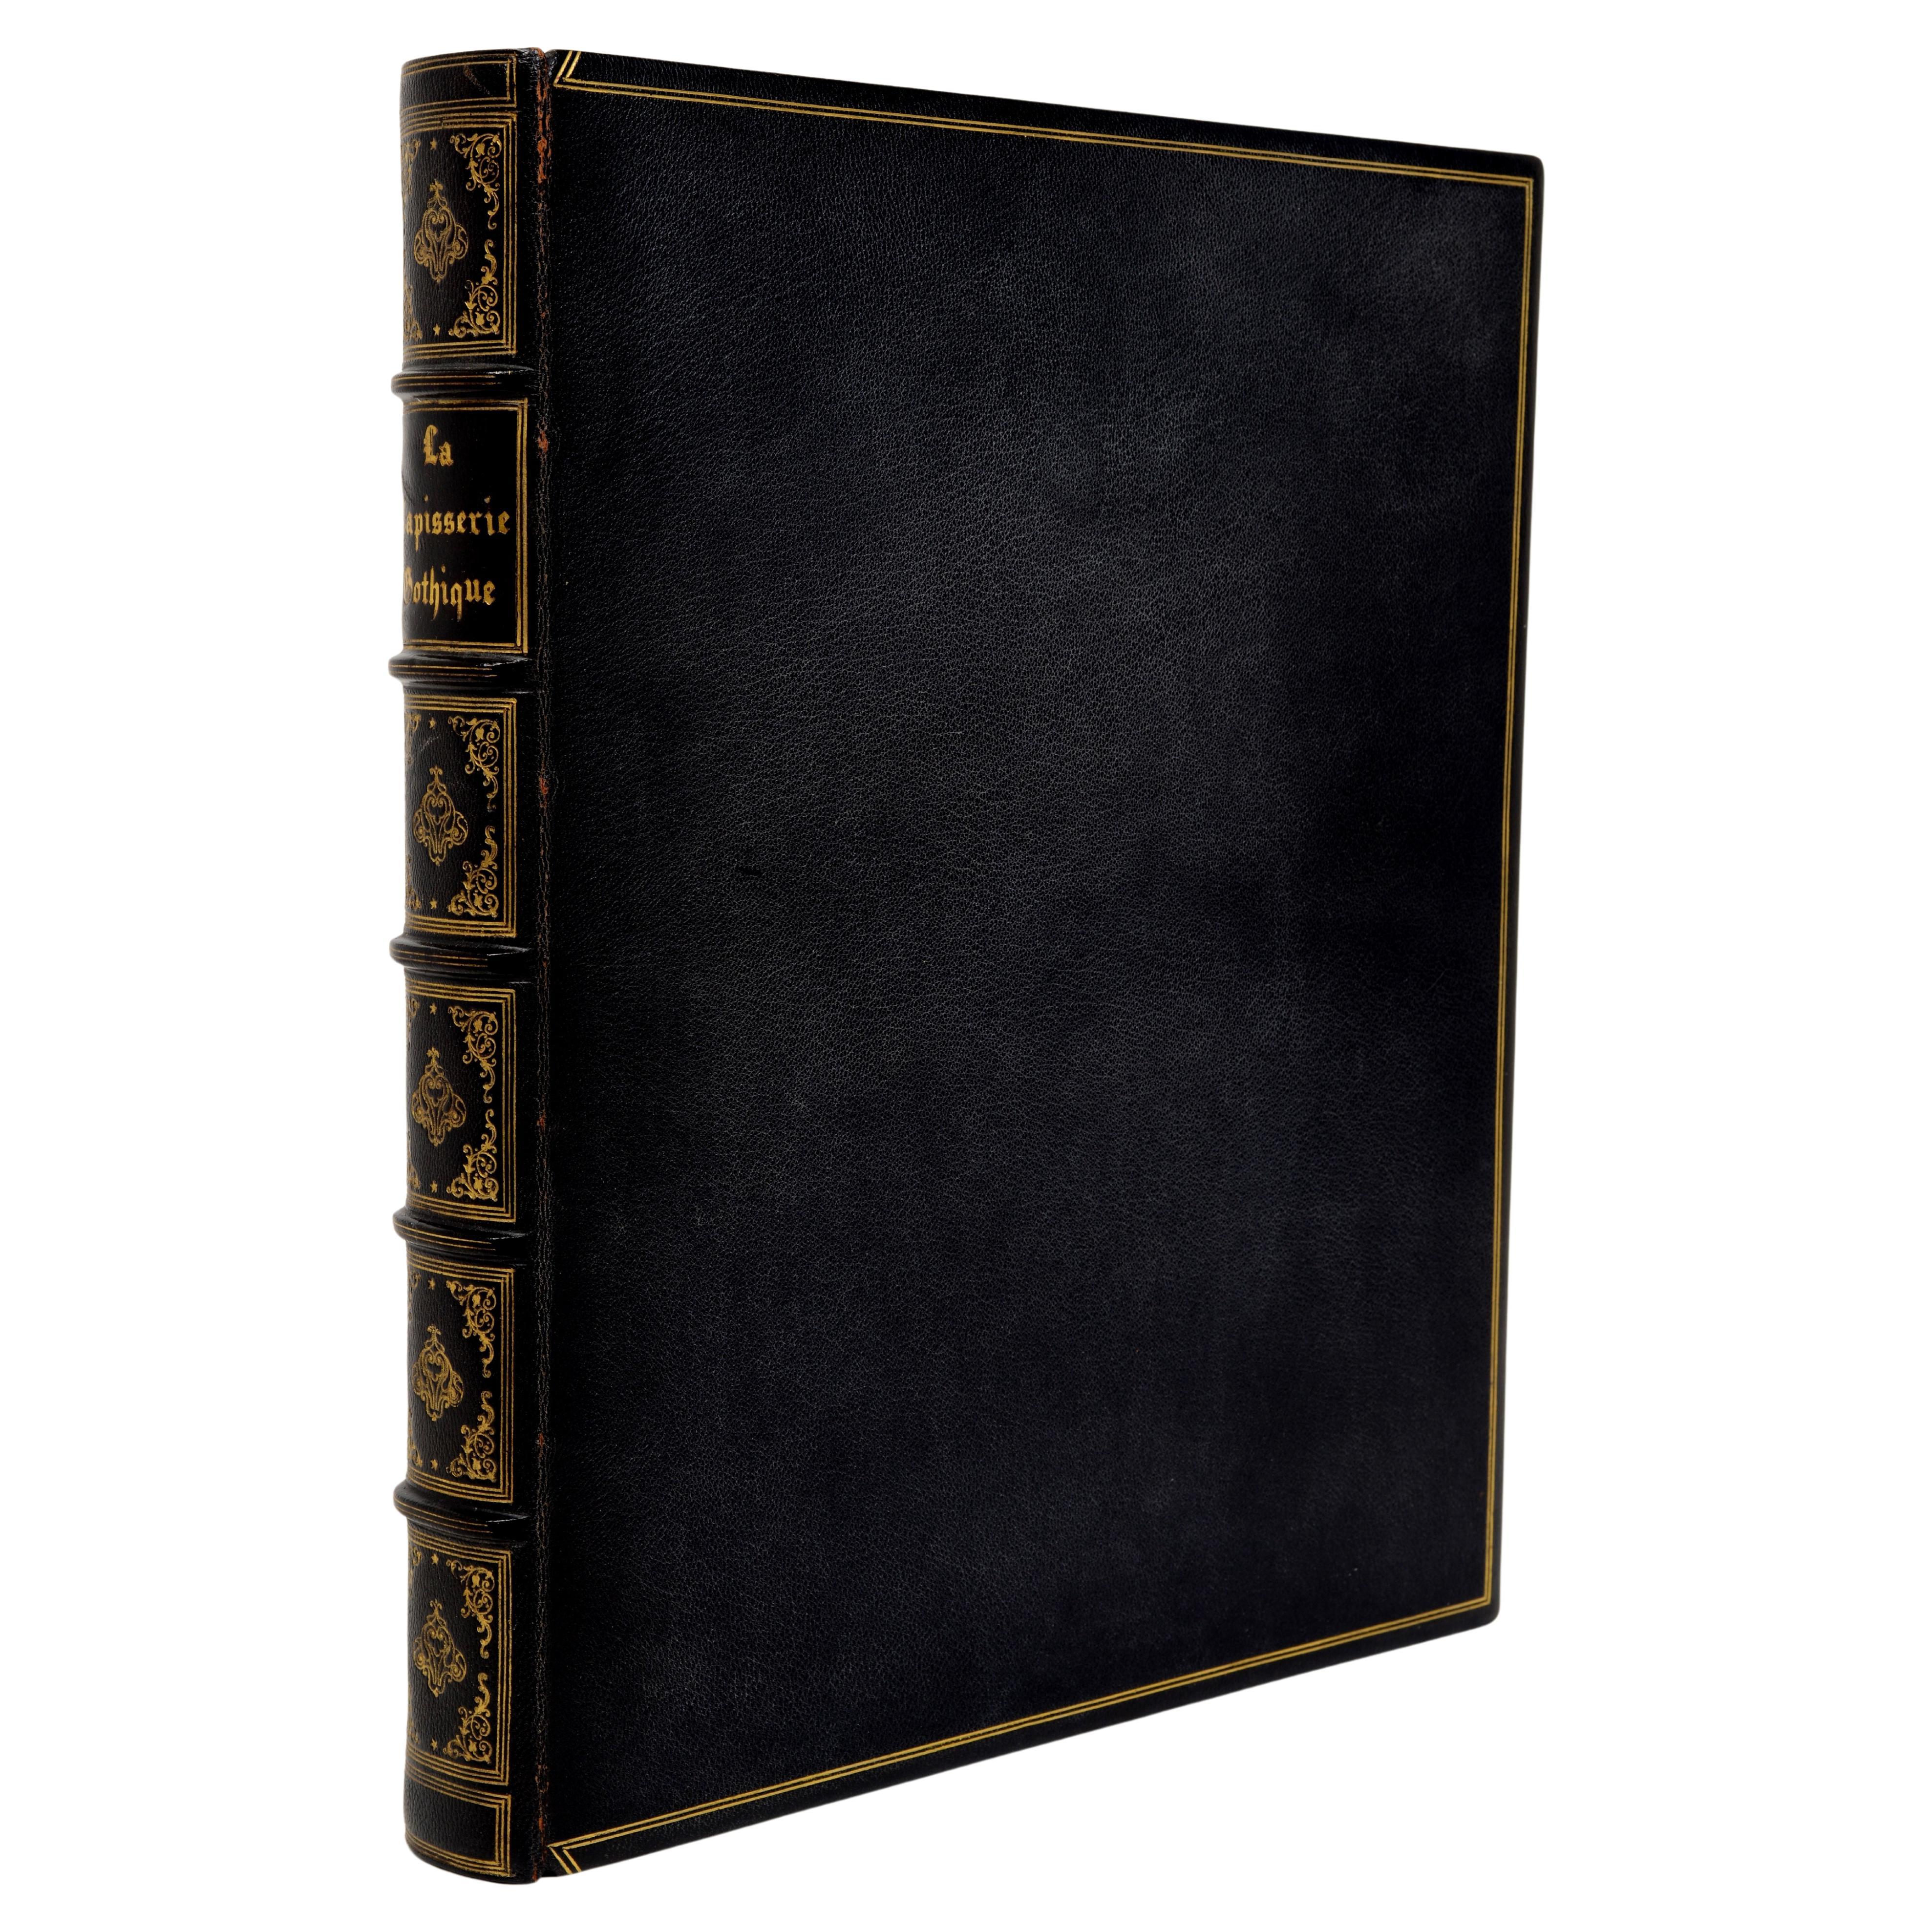 La Tapisserie Gothique by Goeblins, 1st Ed, Leather Bound, Presentation Copy  For Sale